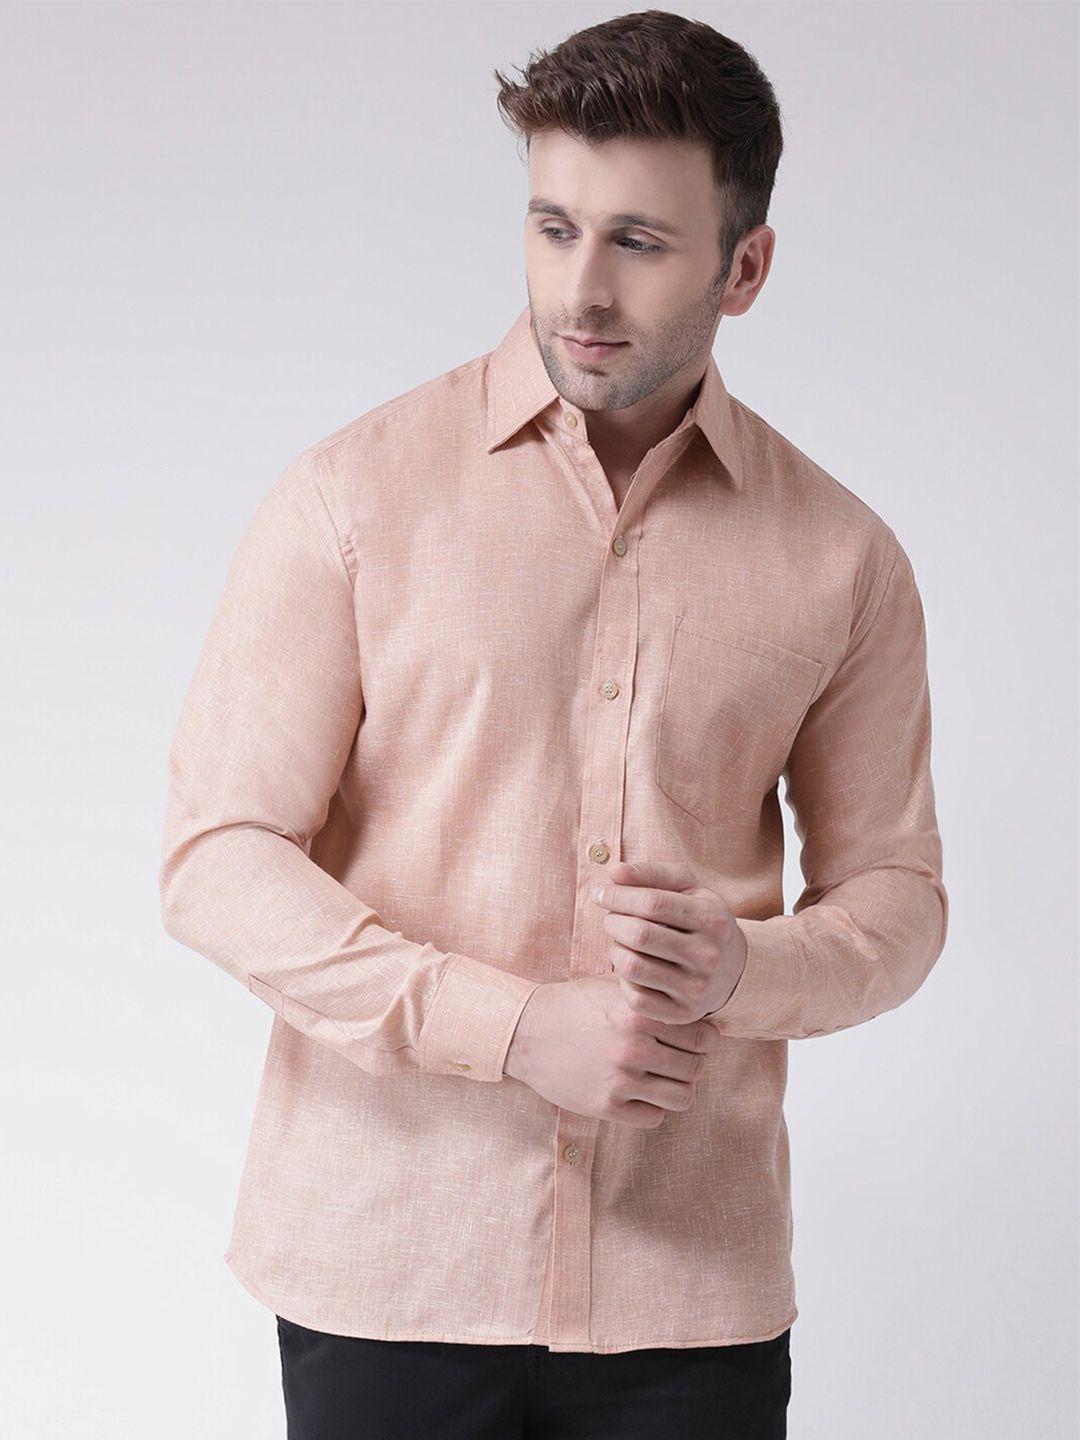 RIAG Men Beige Cotton Casual Shirt